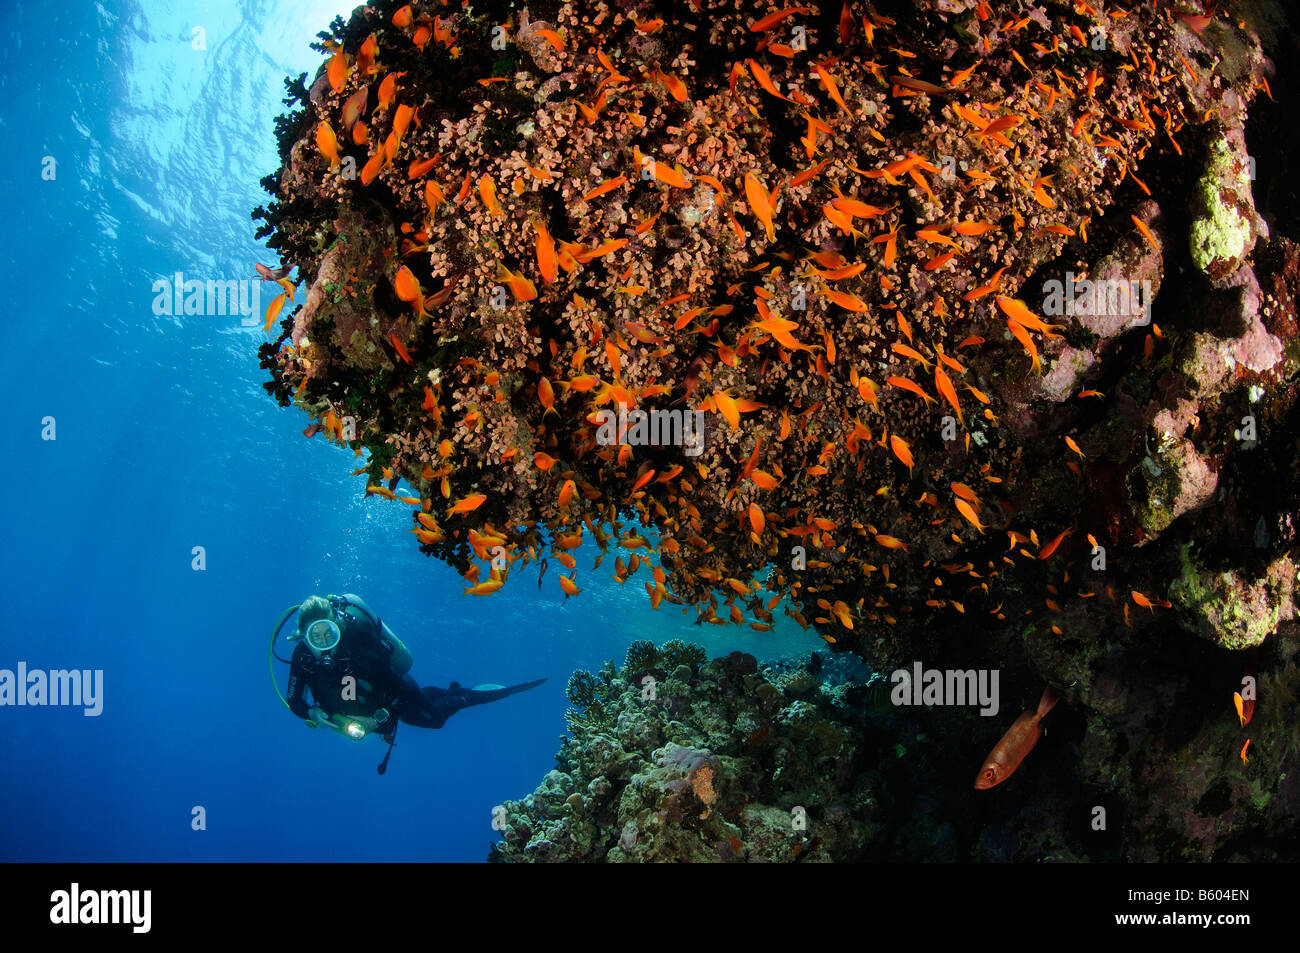 Pseudanthias sp. Anthias fish and scuba diver at coral reef, Red Sea Stock Photo